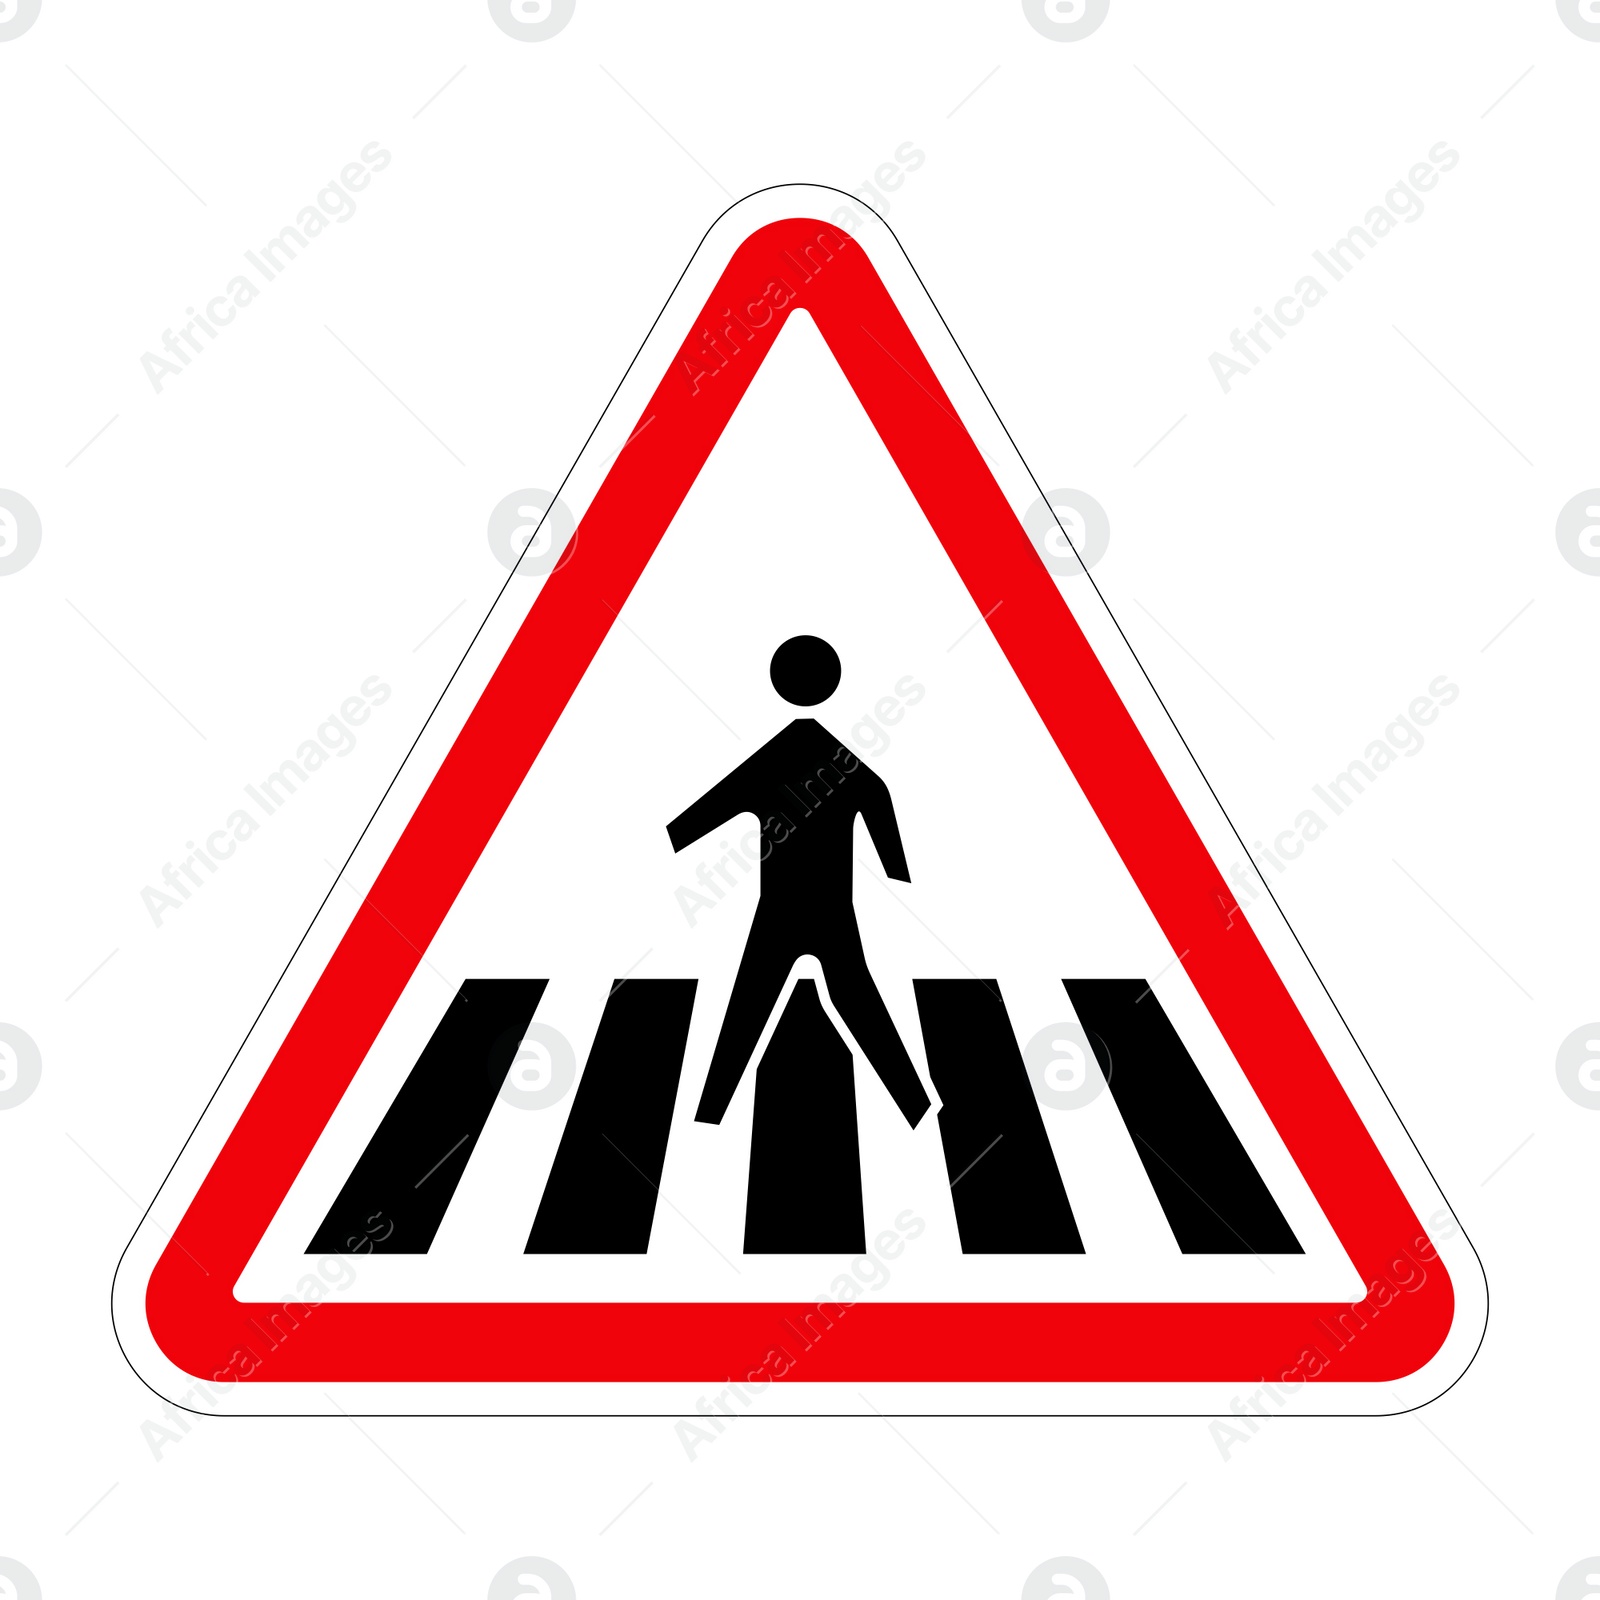 Illustration of Traffic sign ZEBRA CROSSING on white background, illustration